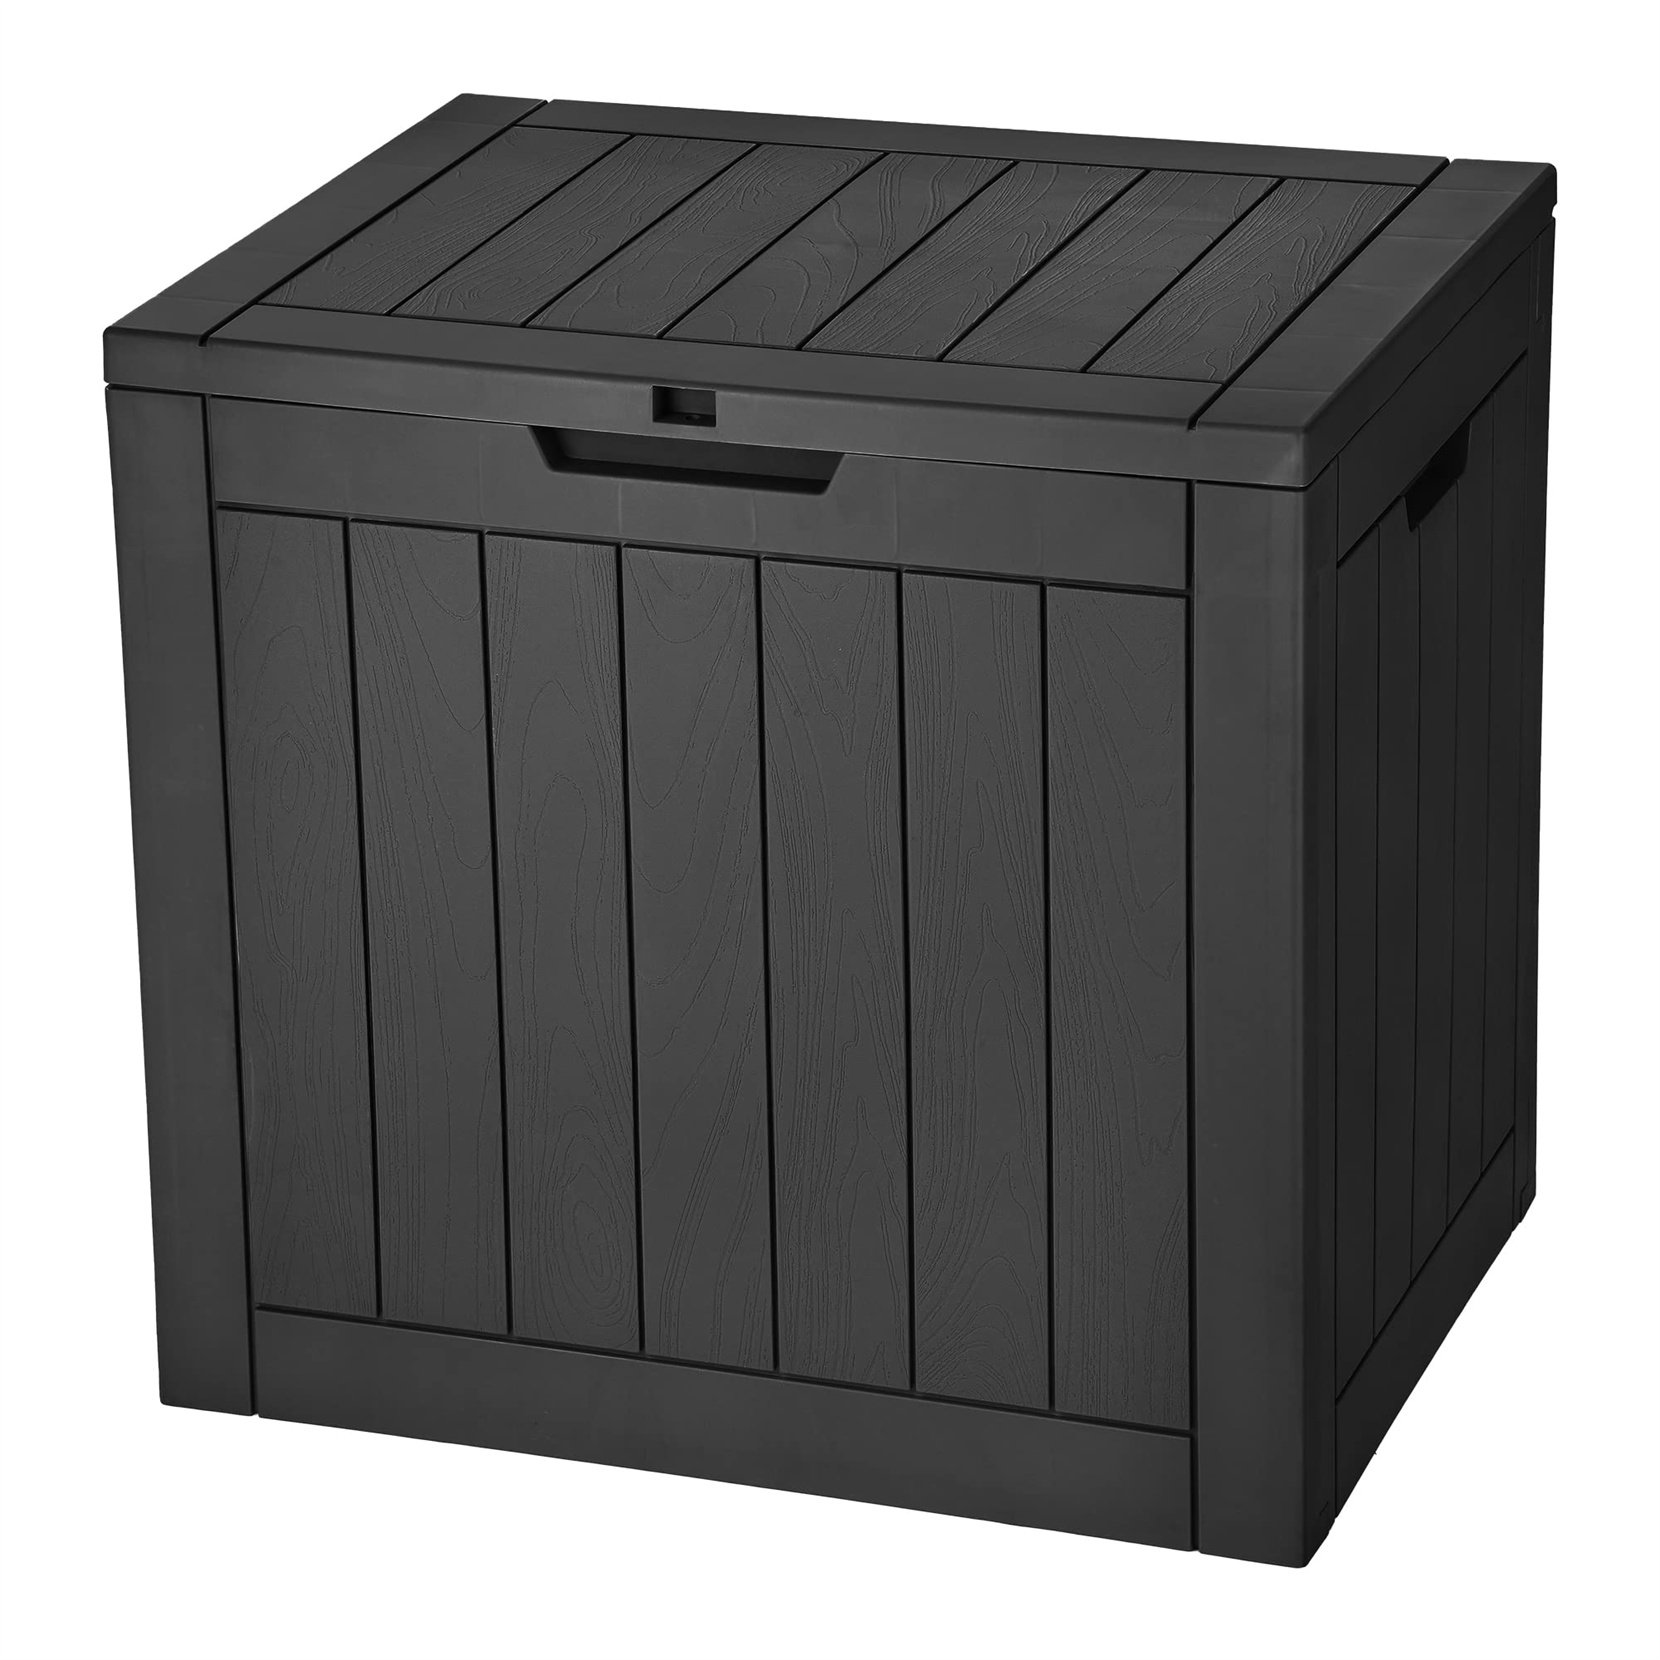 Devoko 100 Gallon Deck Box, Outdoor Storage Bin, Waterproof, Black